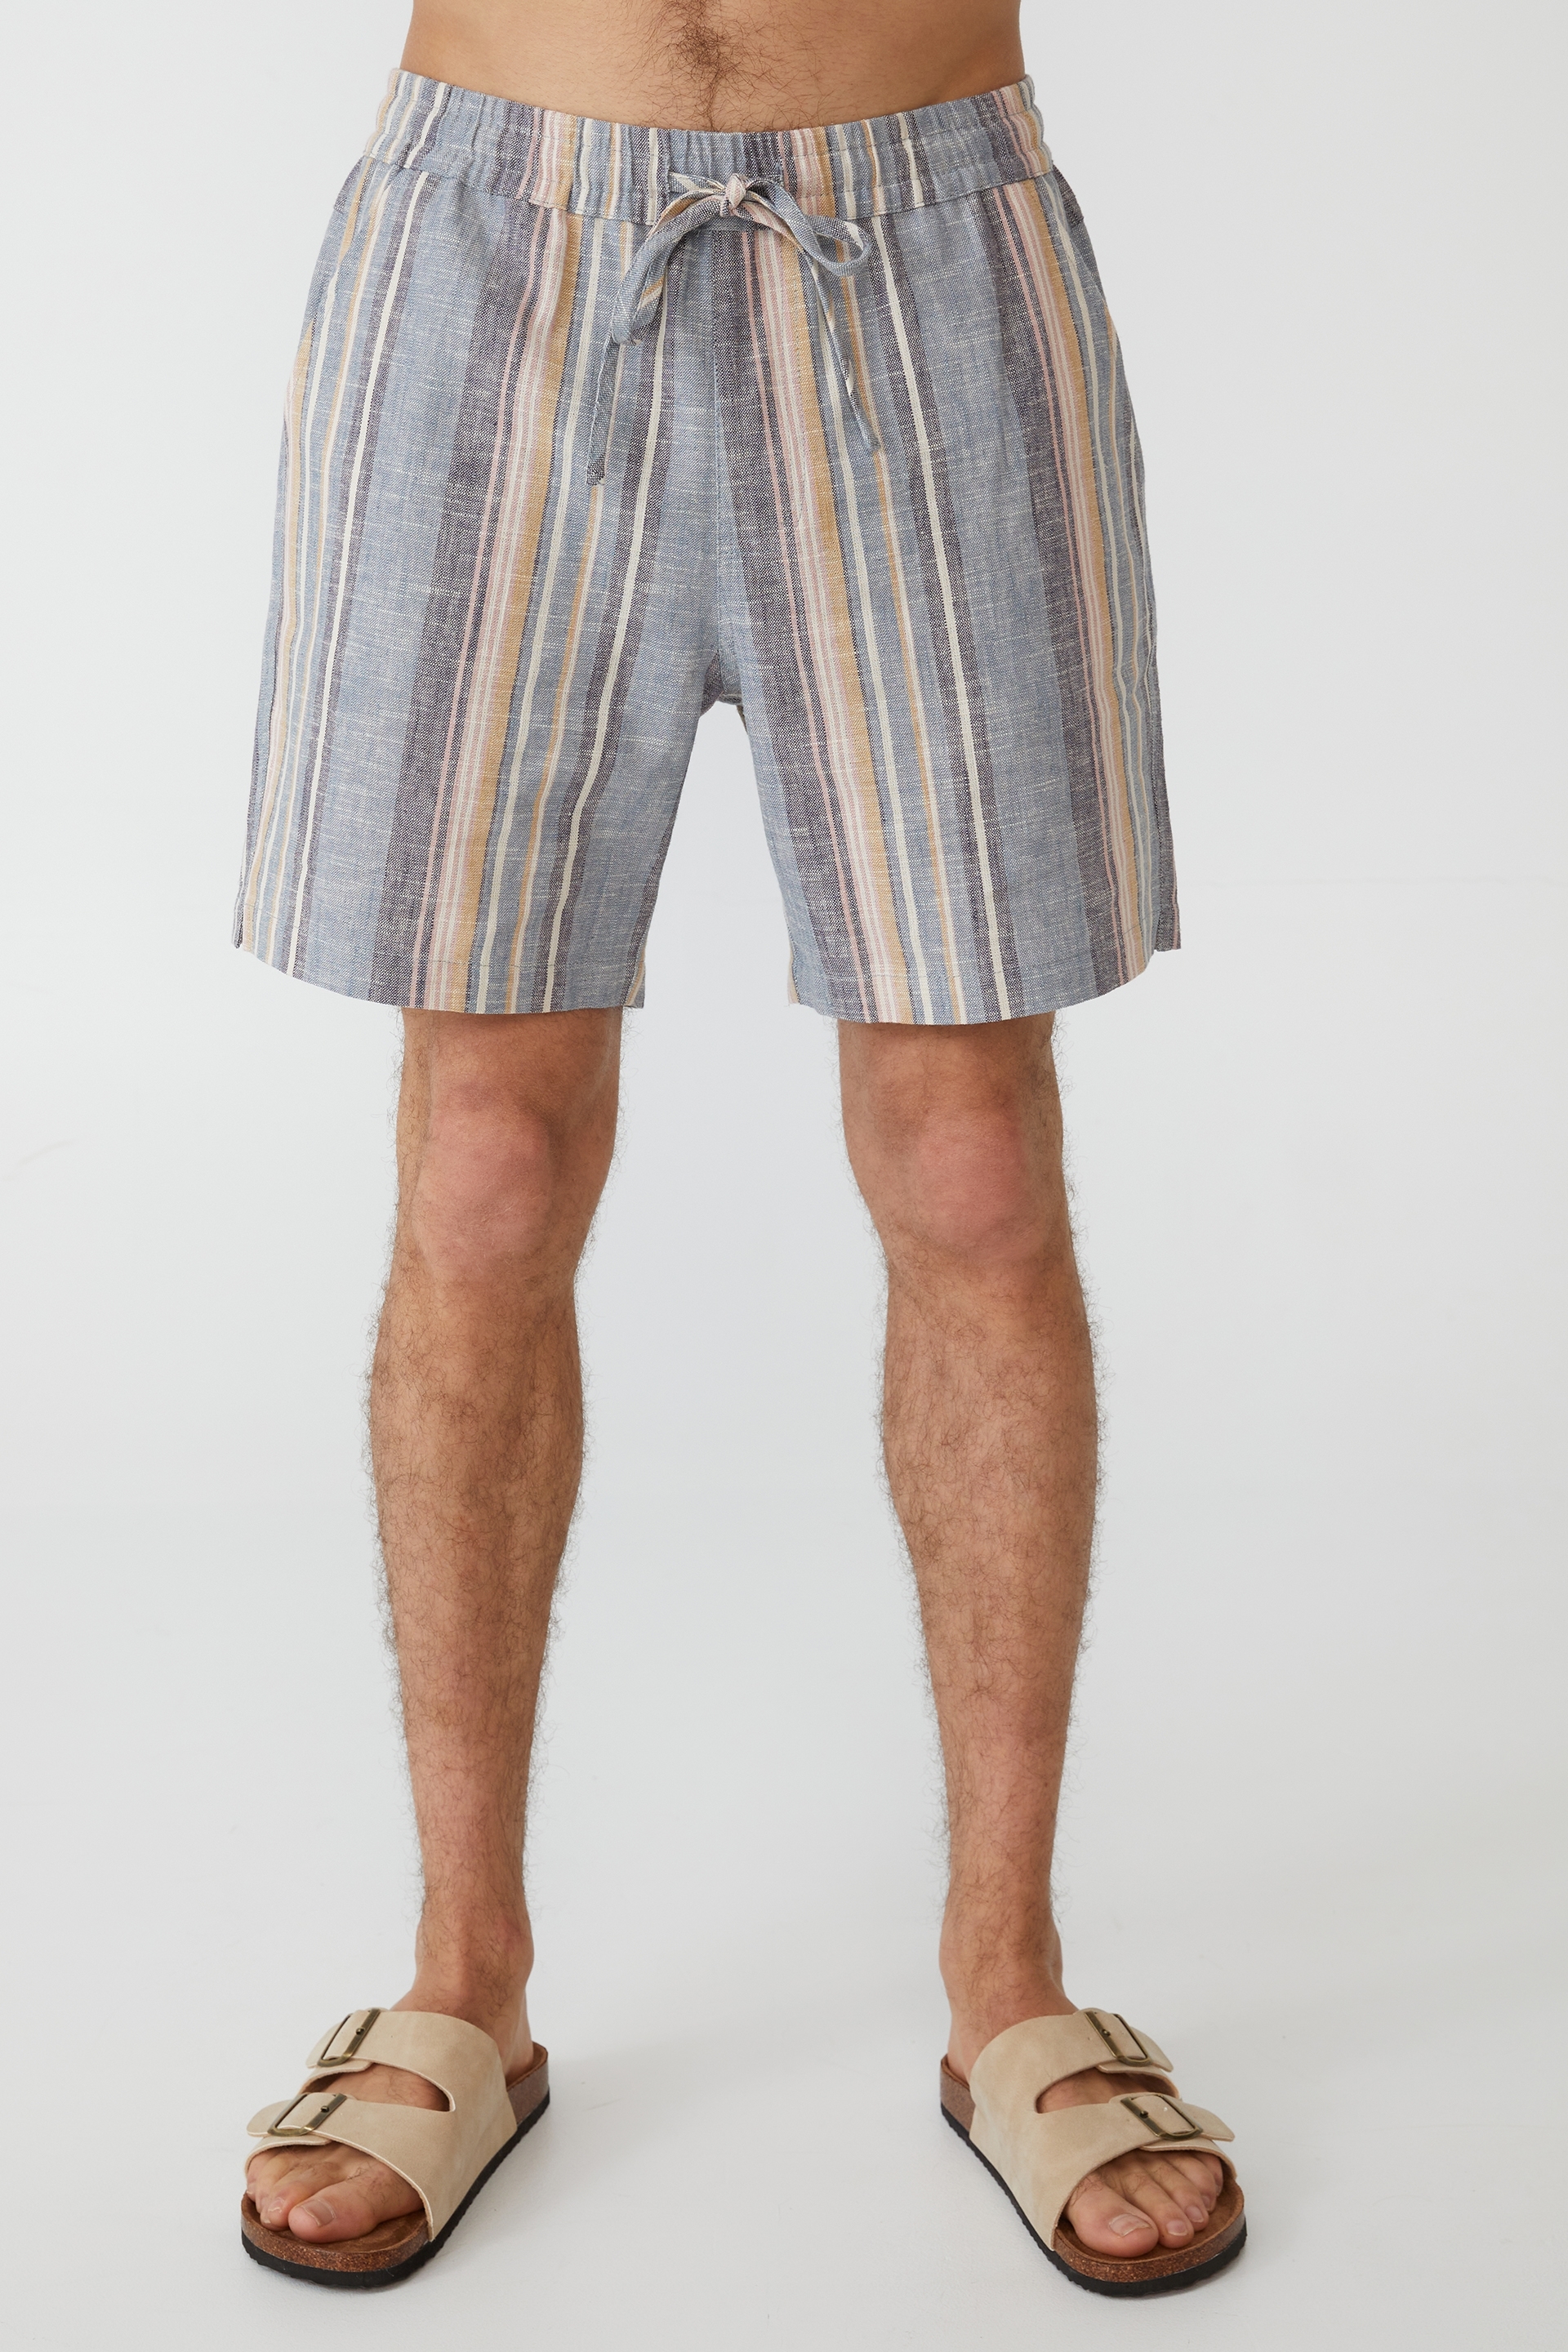 Cotton On Men - East Coast Textured Short - Dusty blue stripe